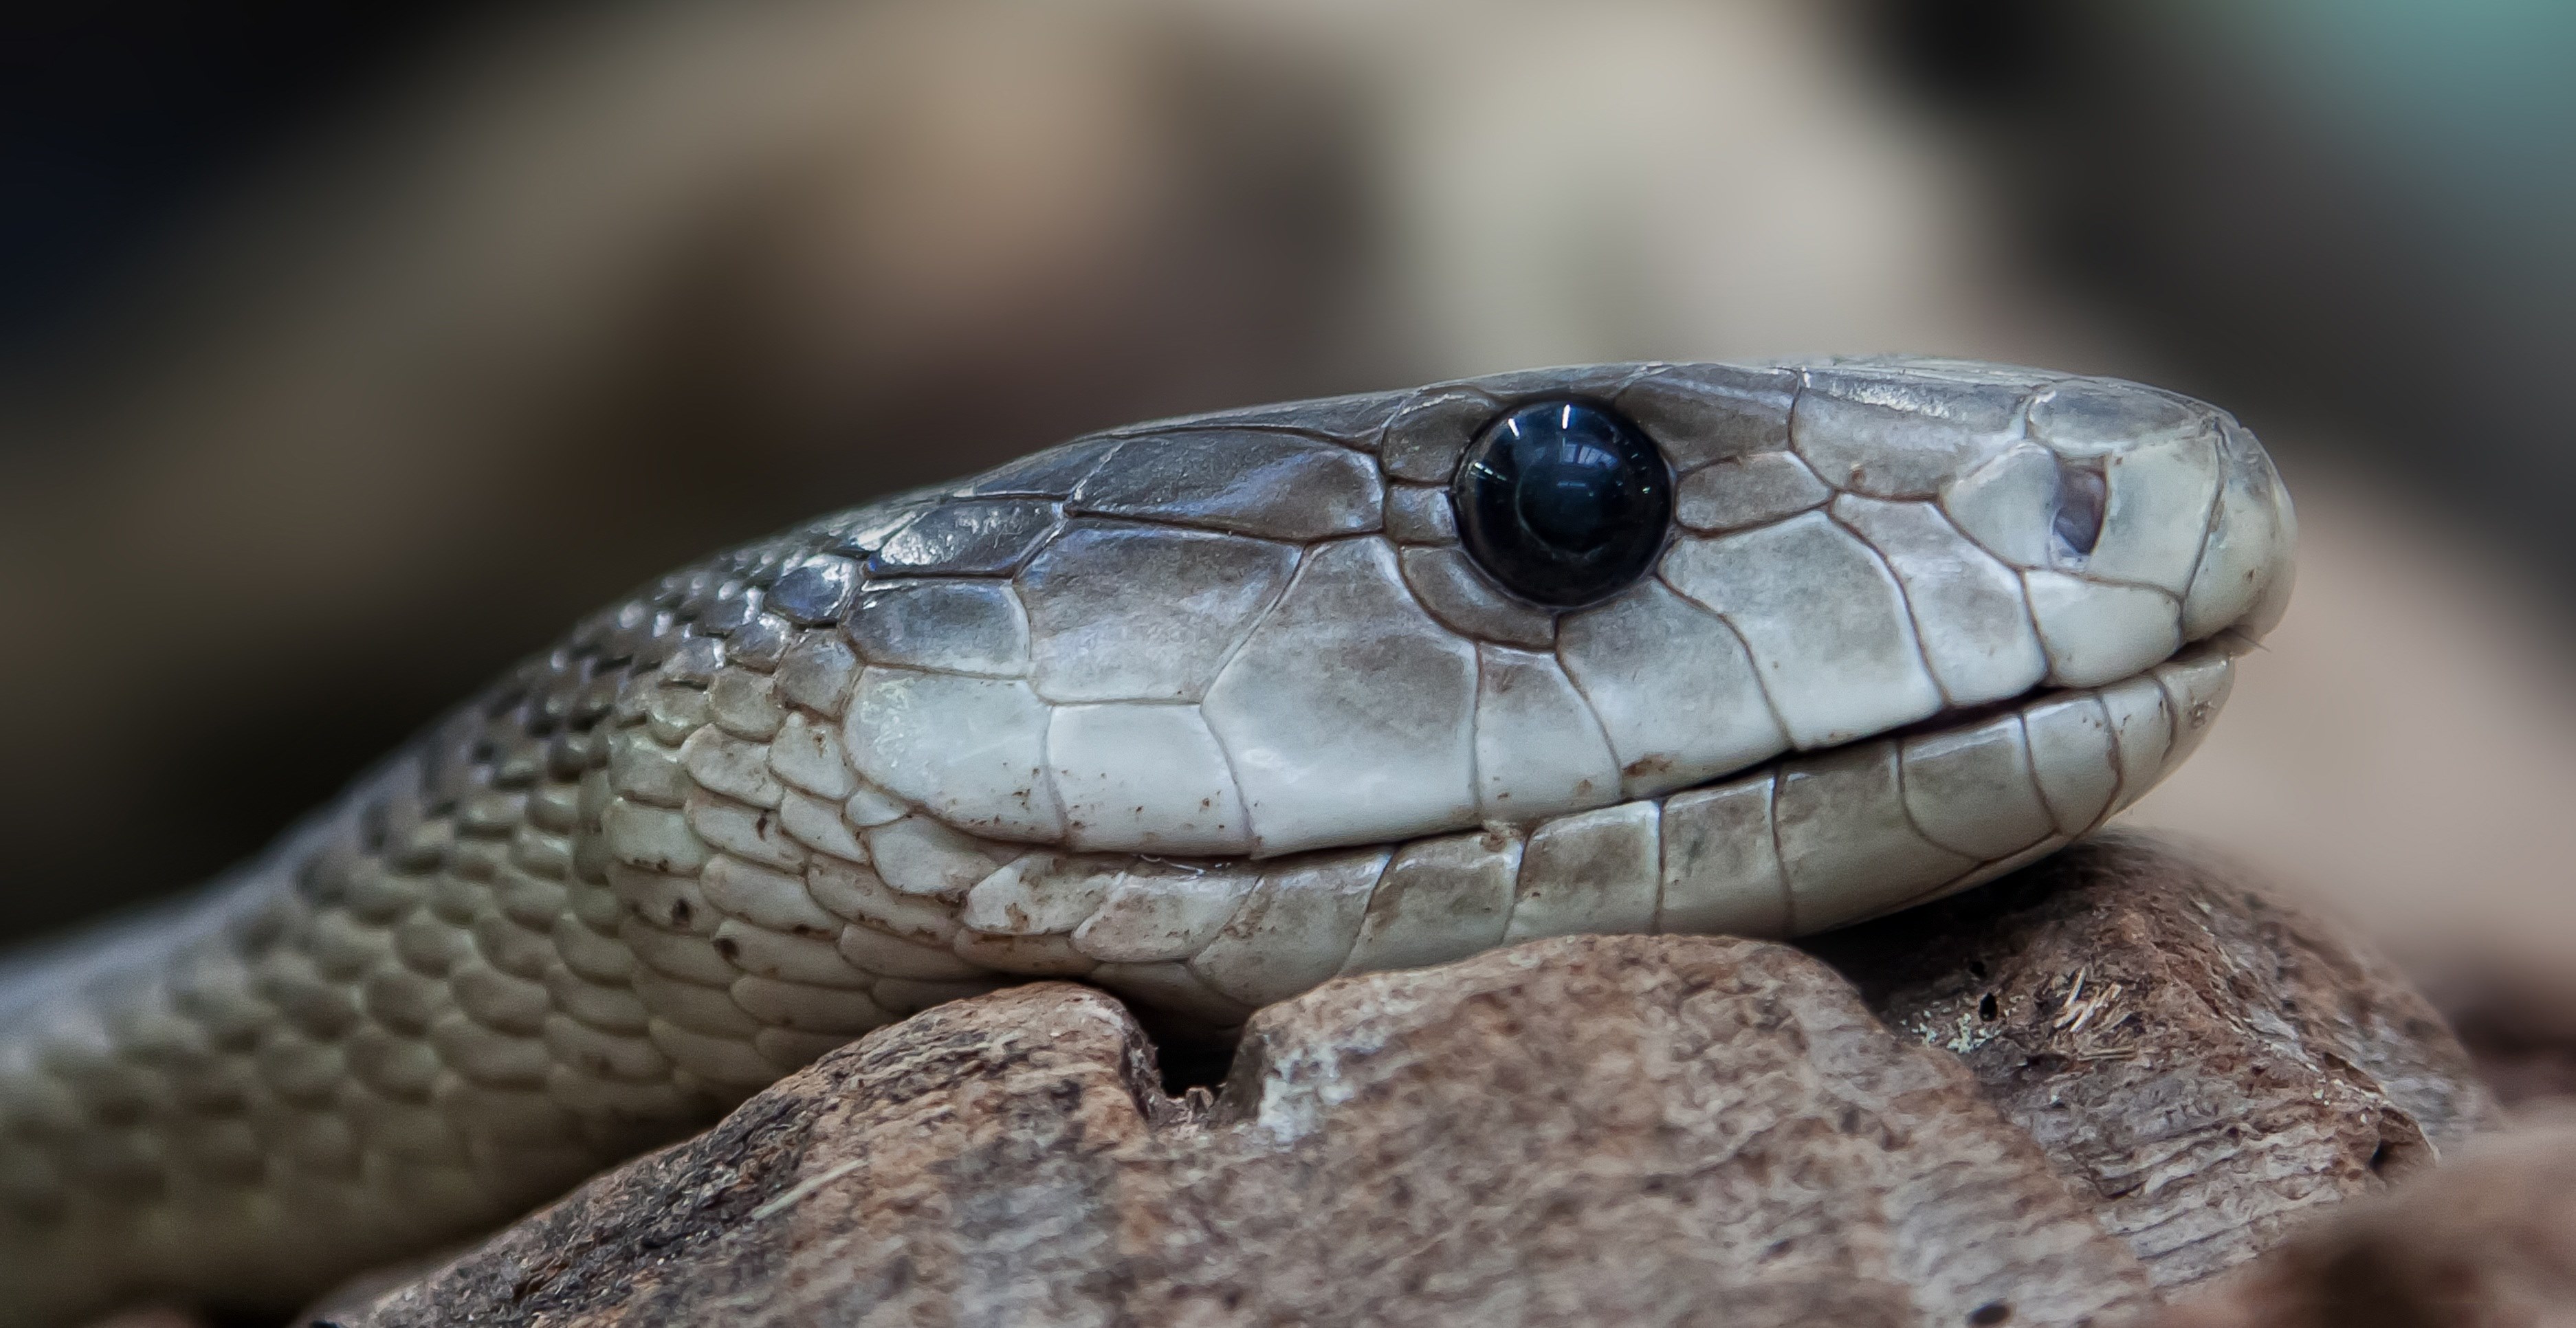 Wallpaper / snake toxic dangerous terrarium viper risk animal 4k wallpaper free download